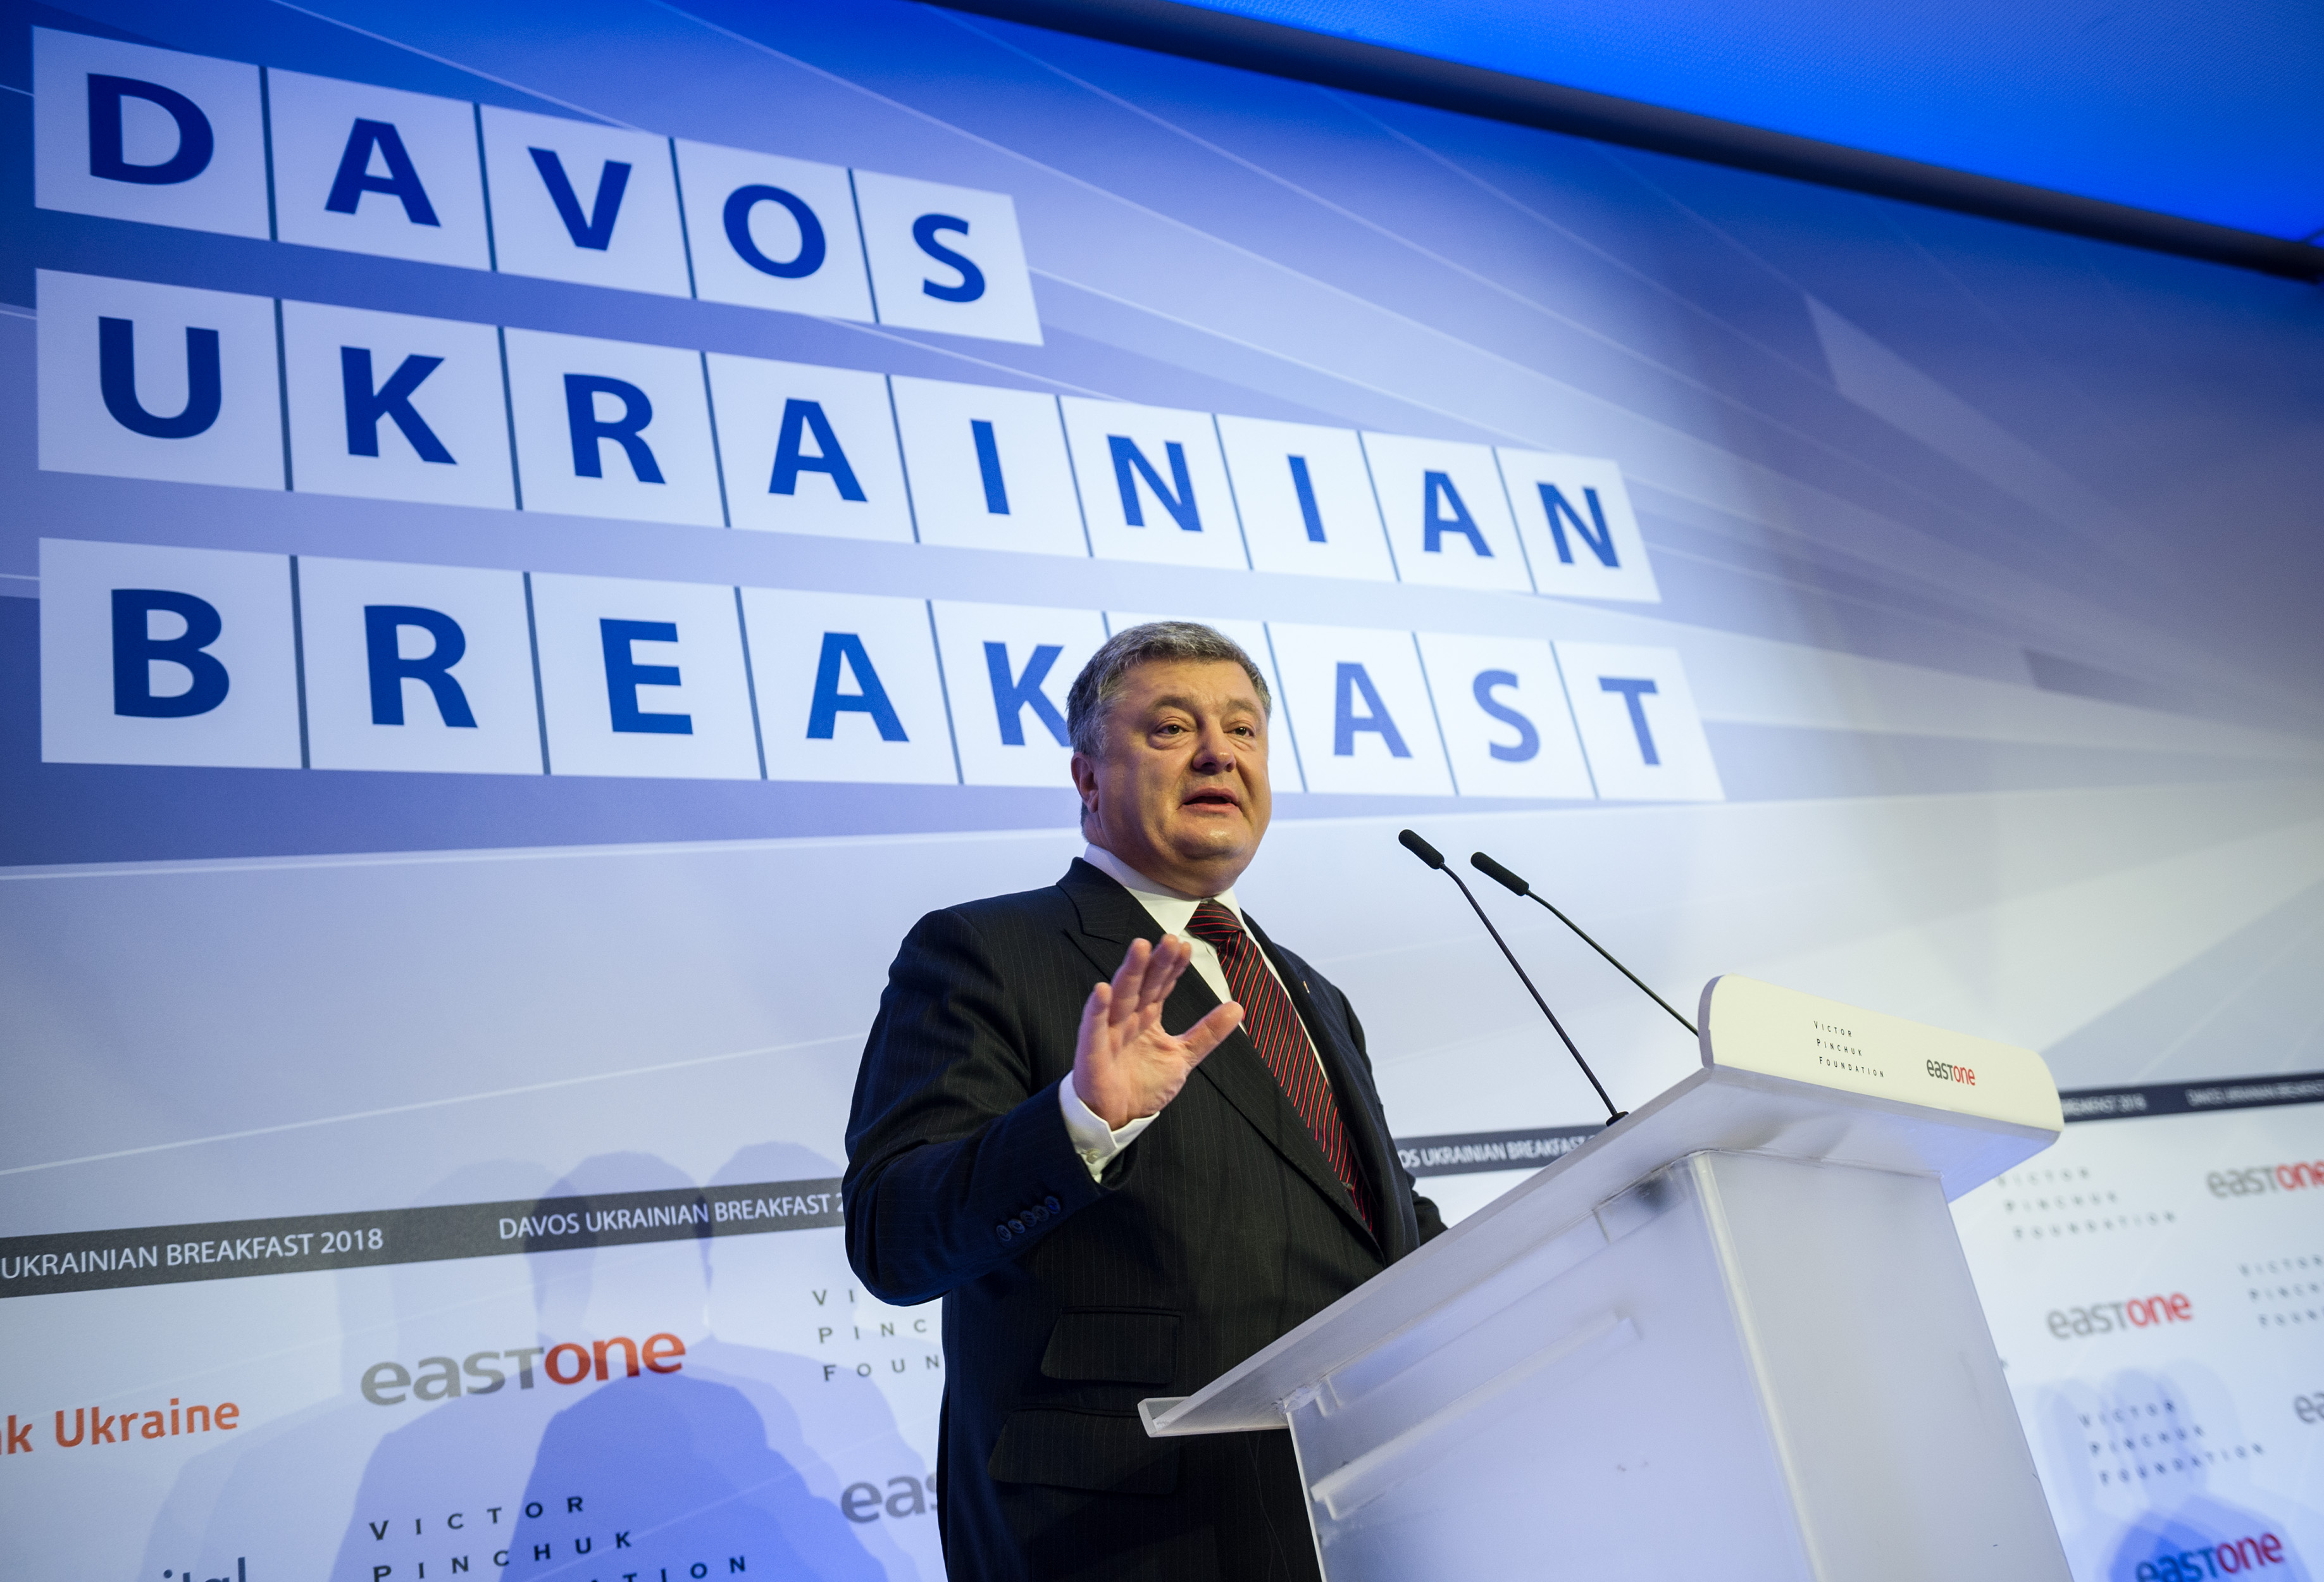 Davos Ukrainian Breakfast 2018